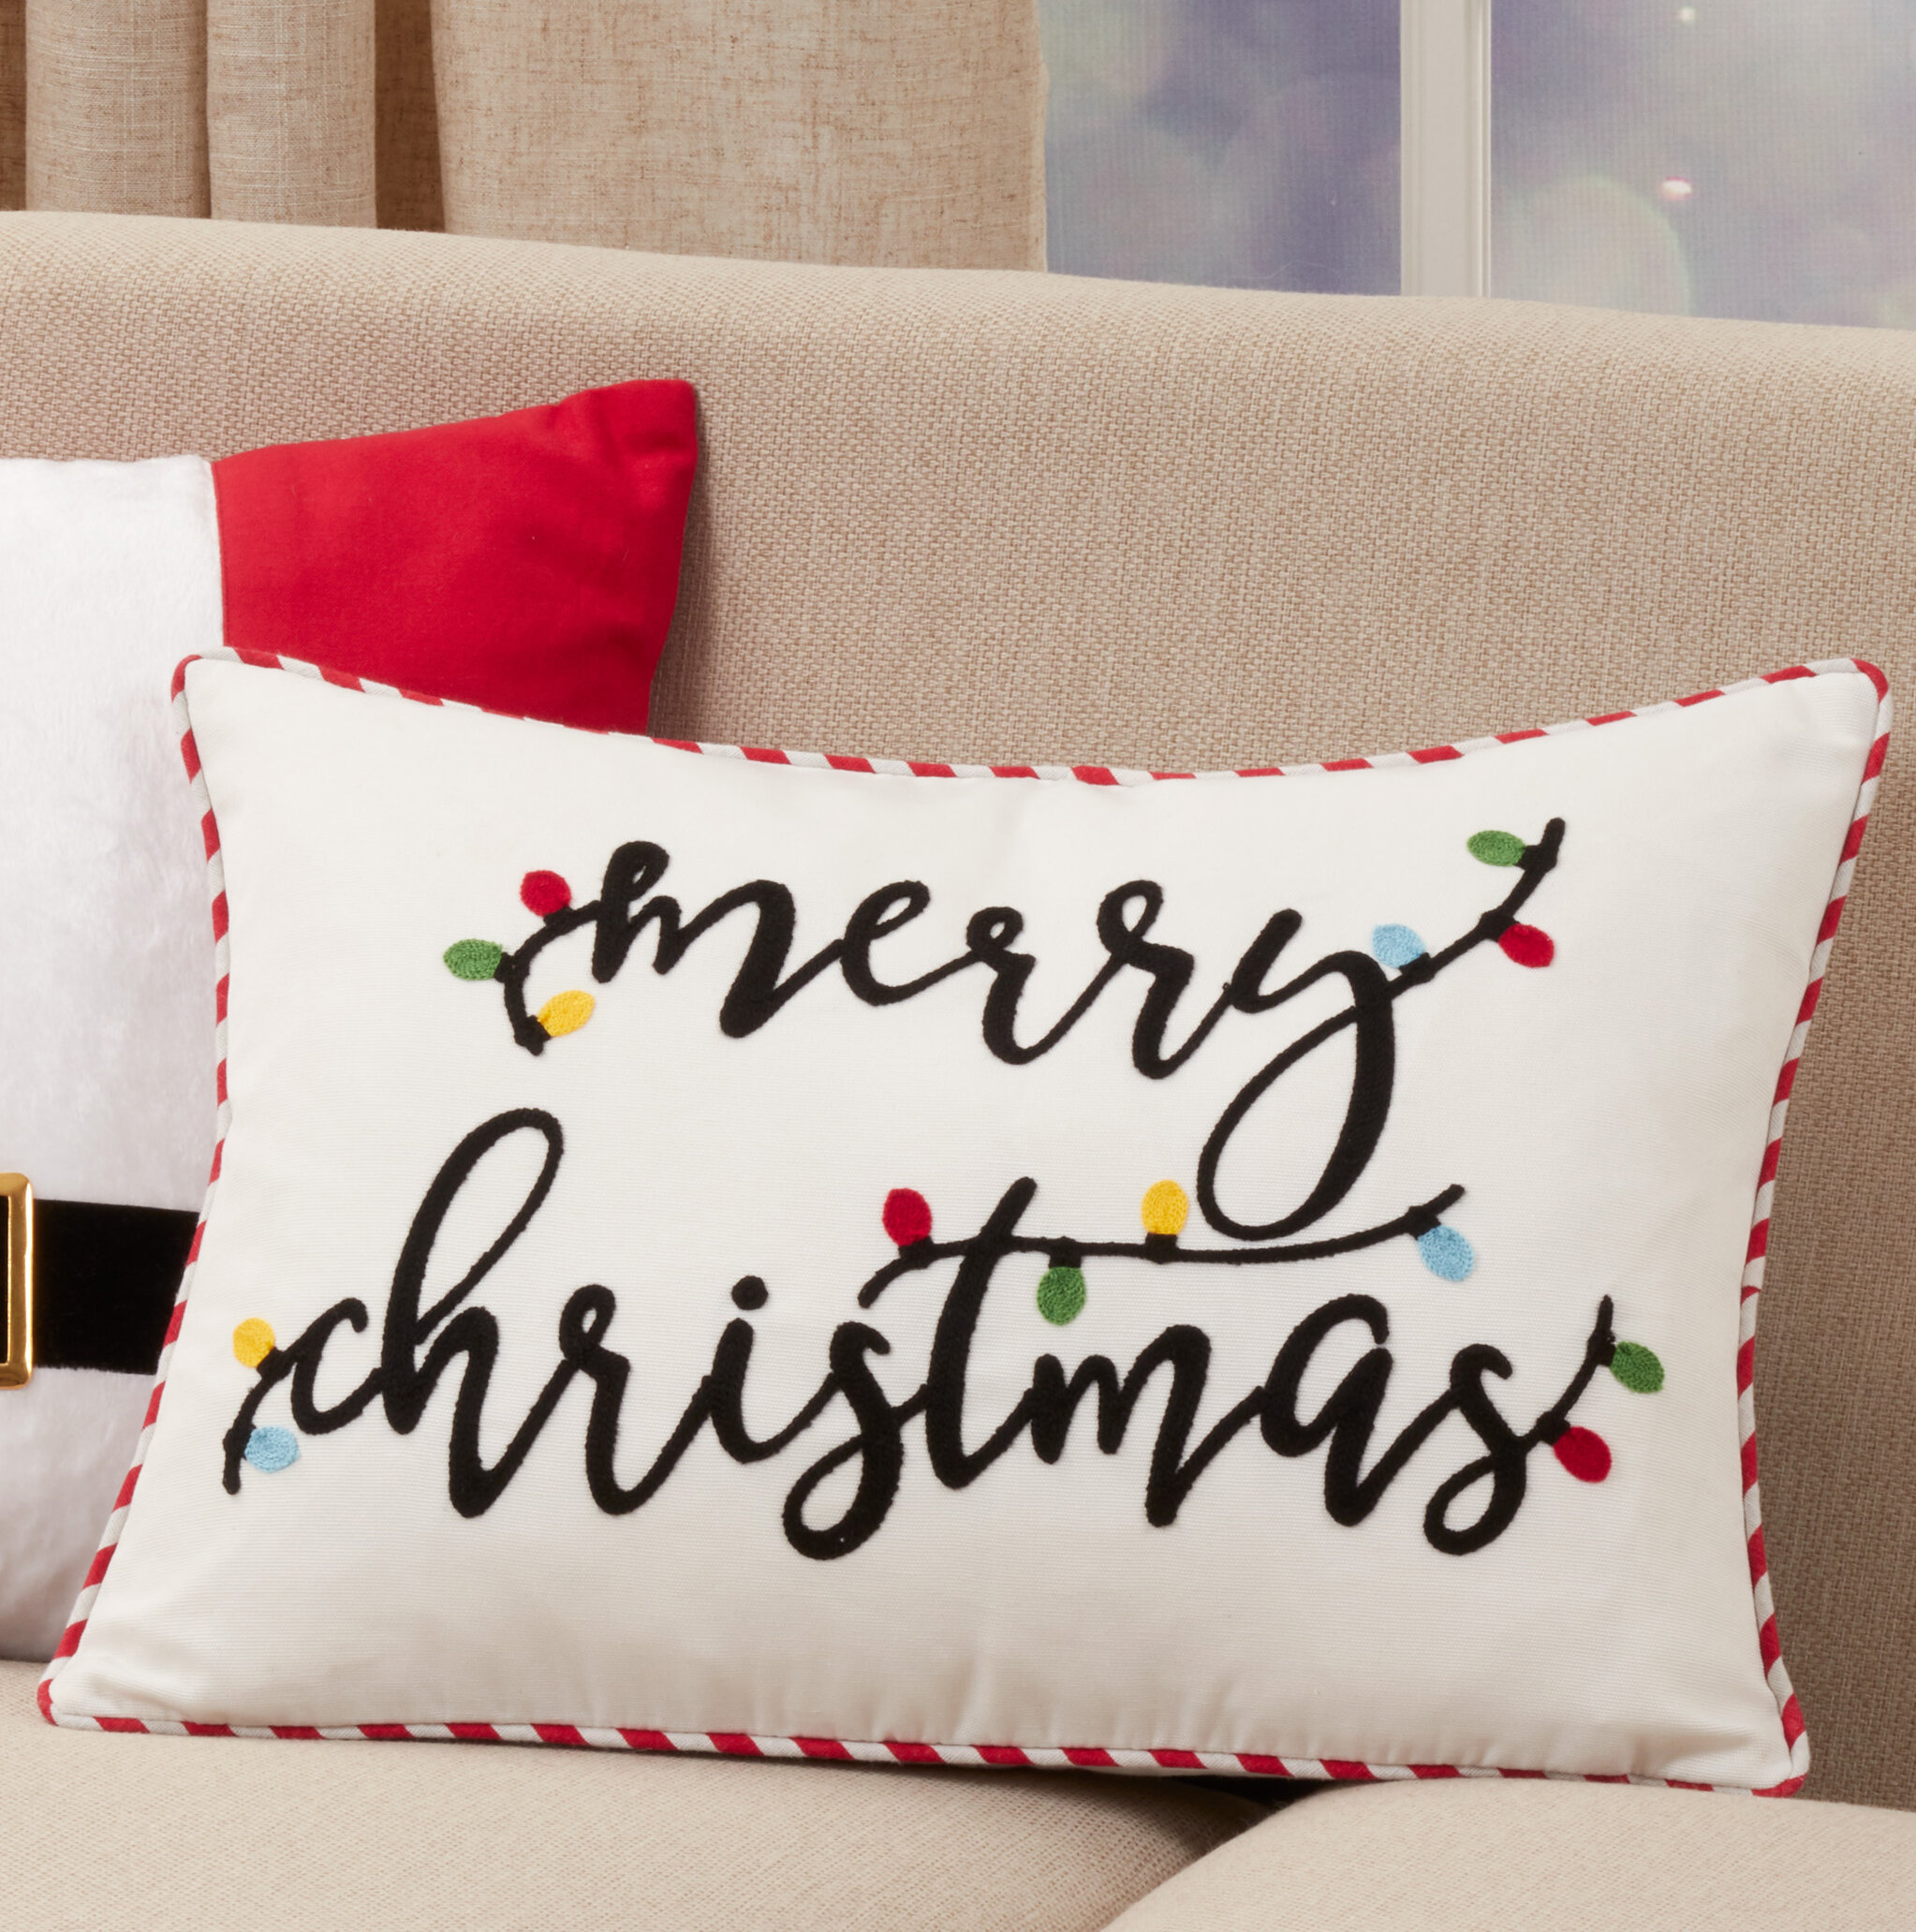 Festive Merry Christmas Pillow